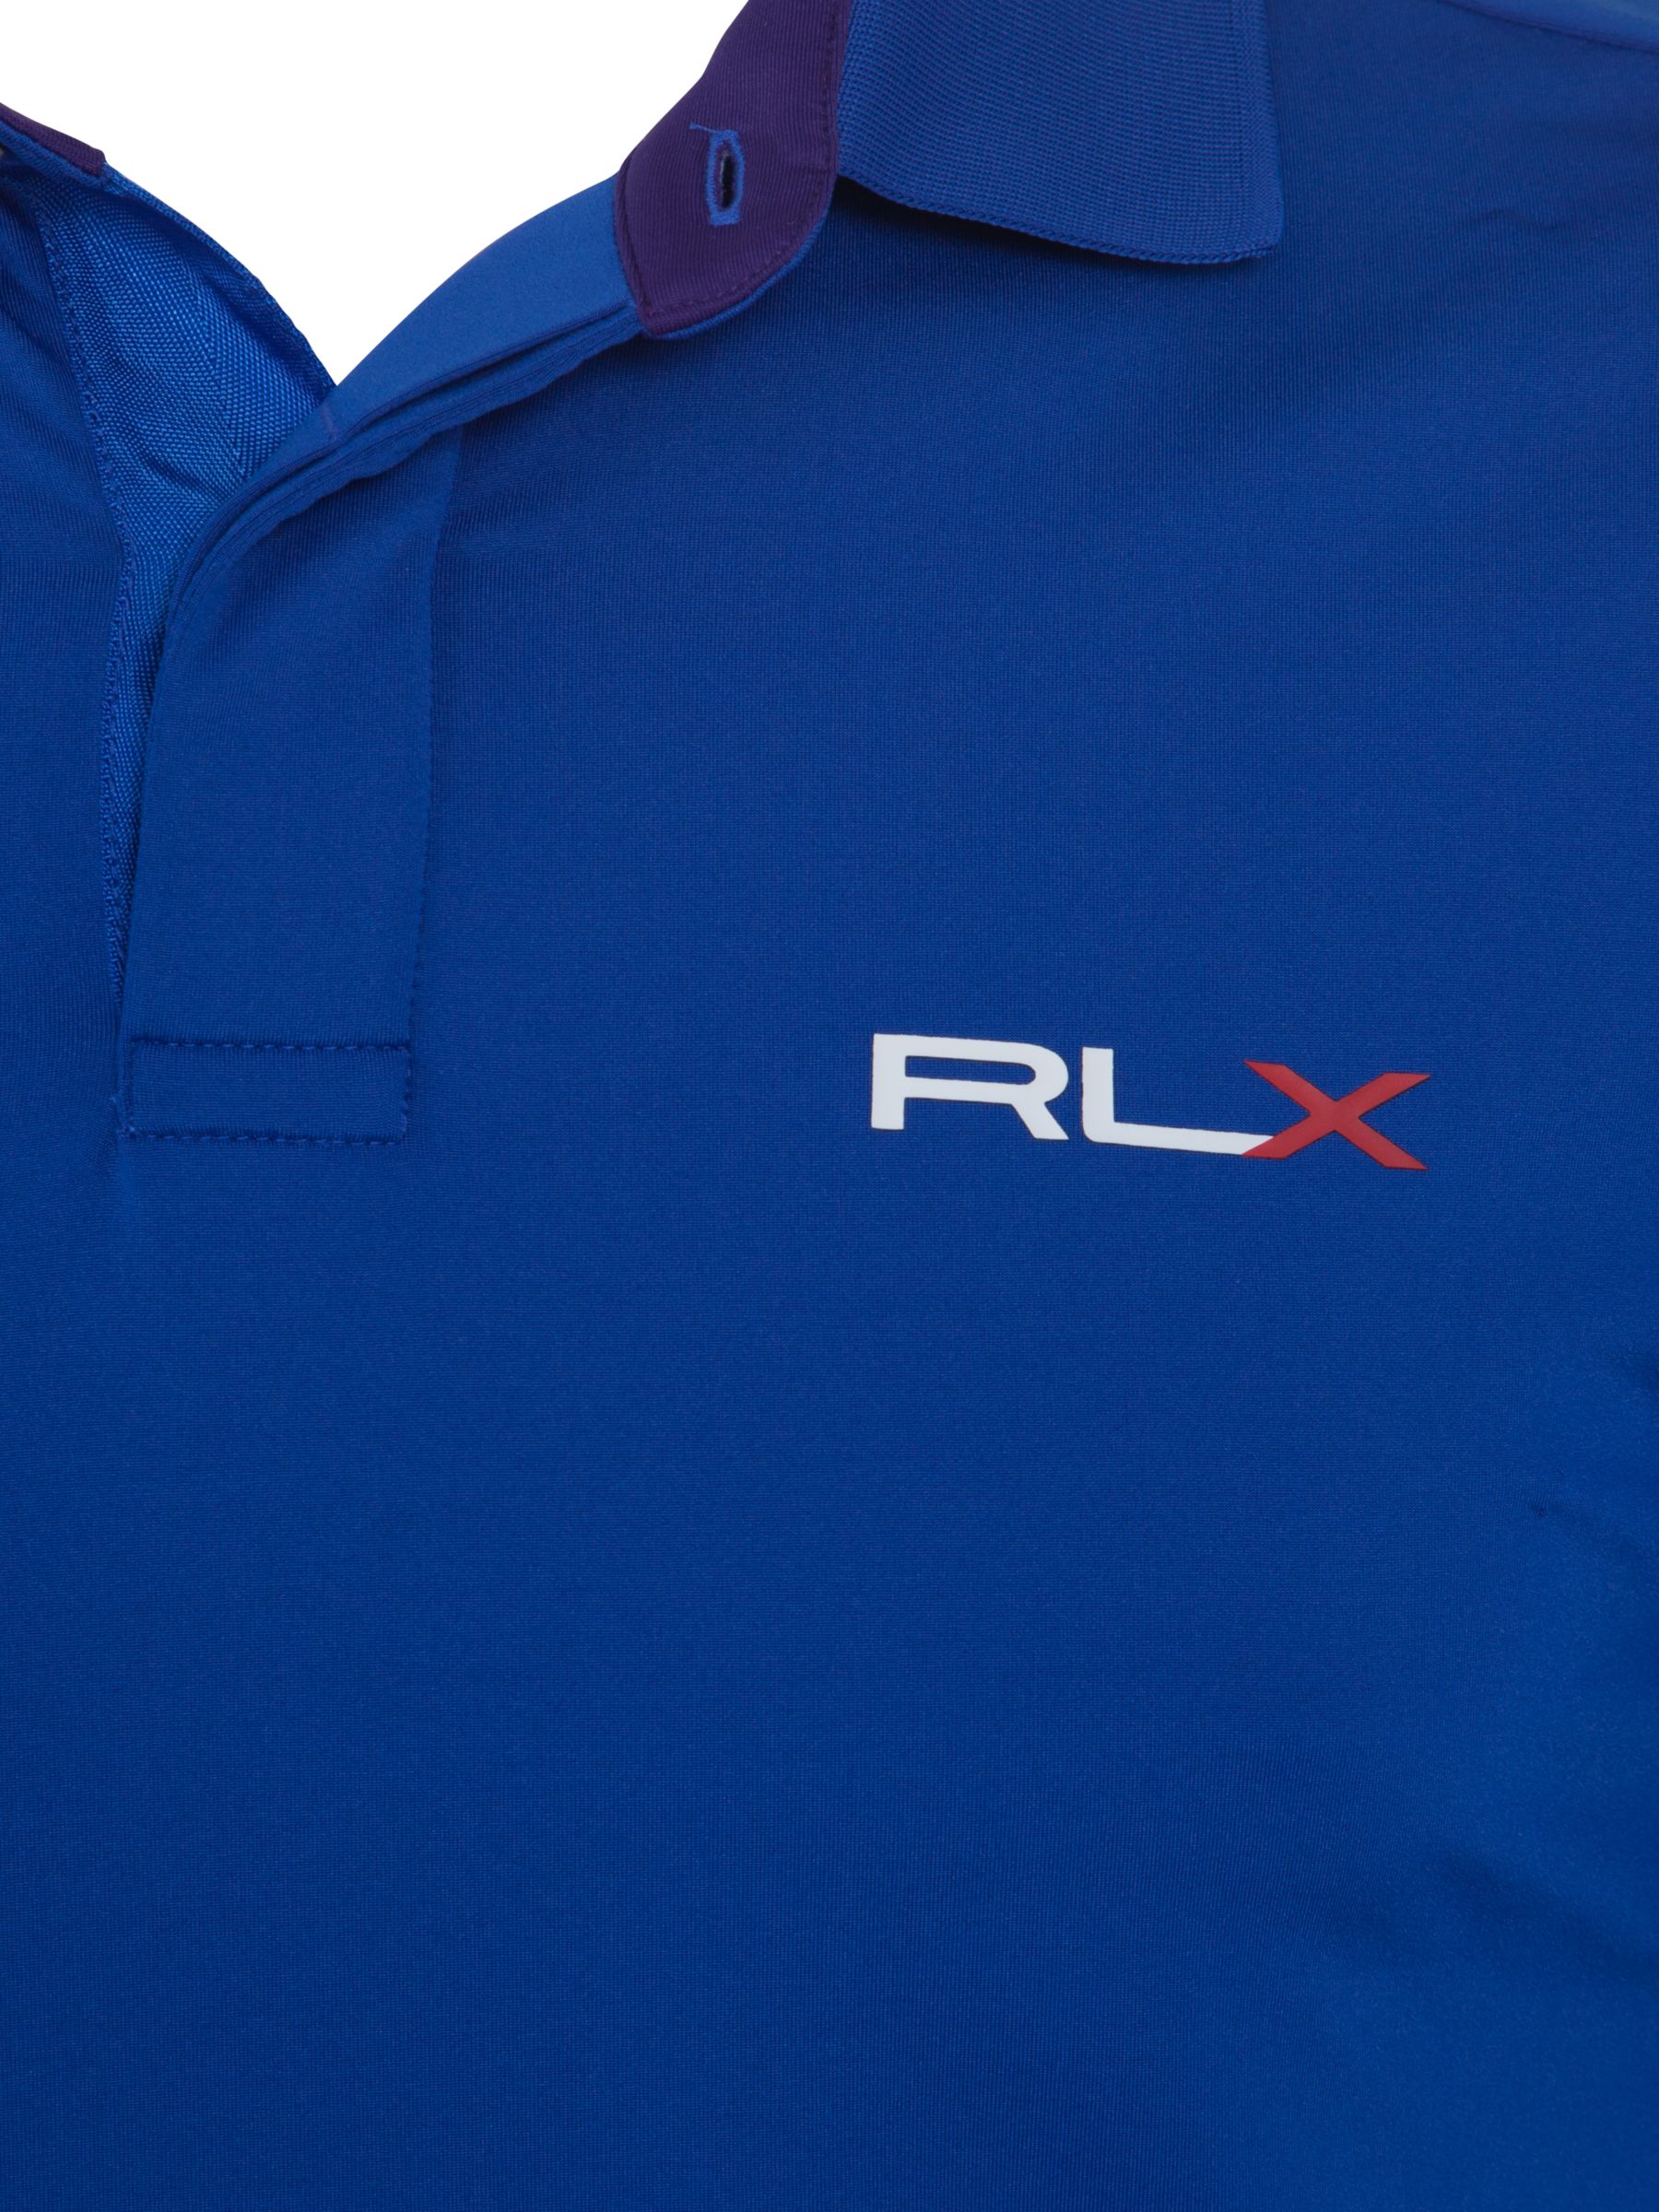 rlx golf apparel